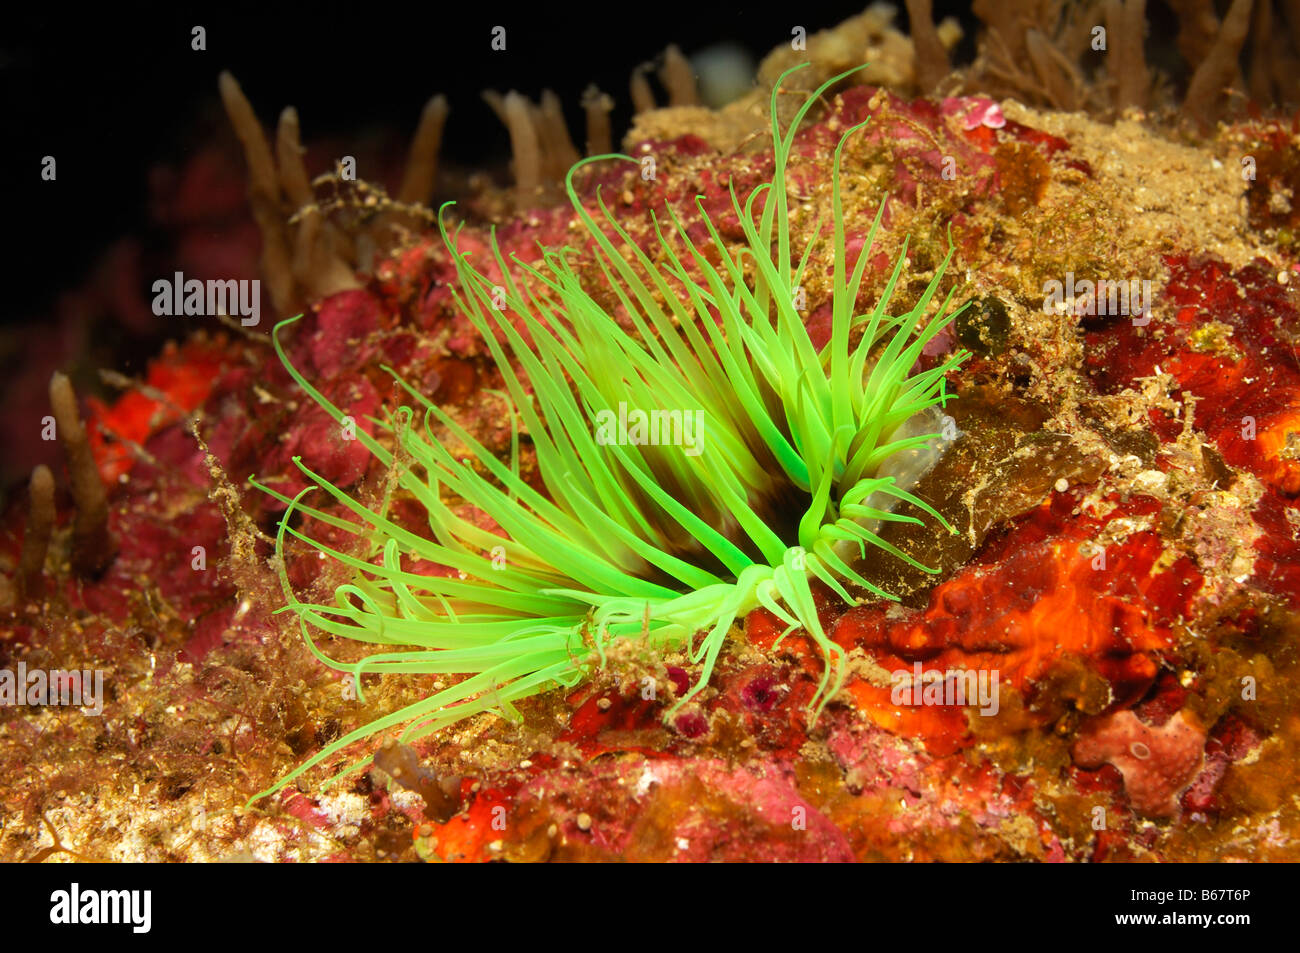 Fluorescent Anemone Cerianthus membranaceus Kas Mediterranean Sea Turkey Stock Photo